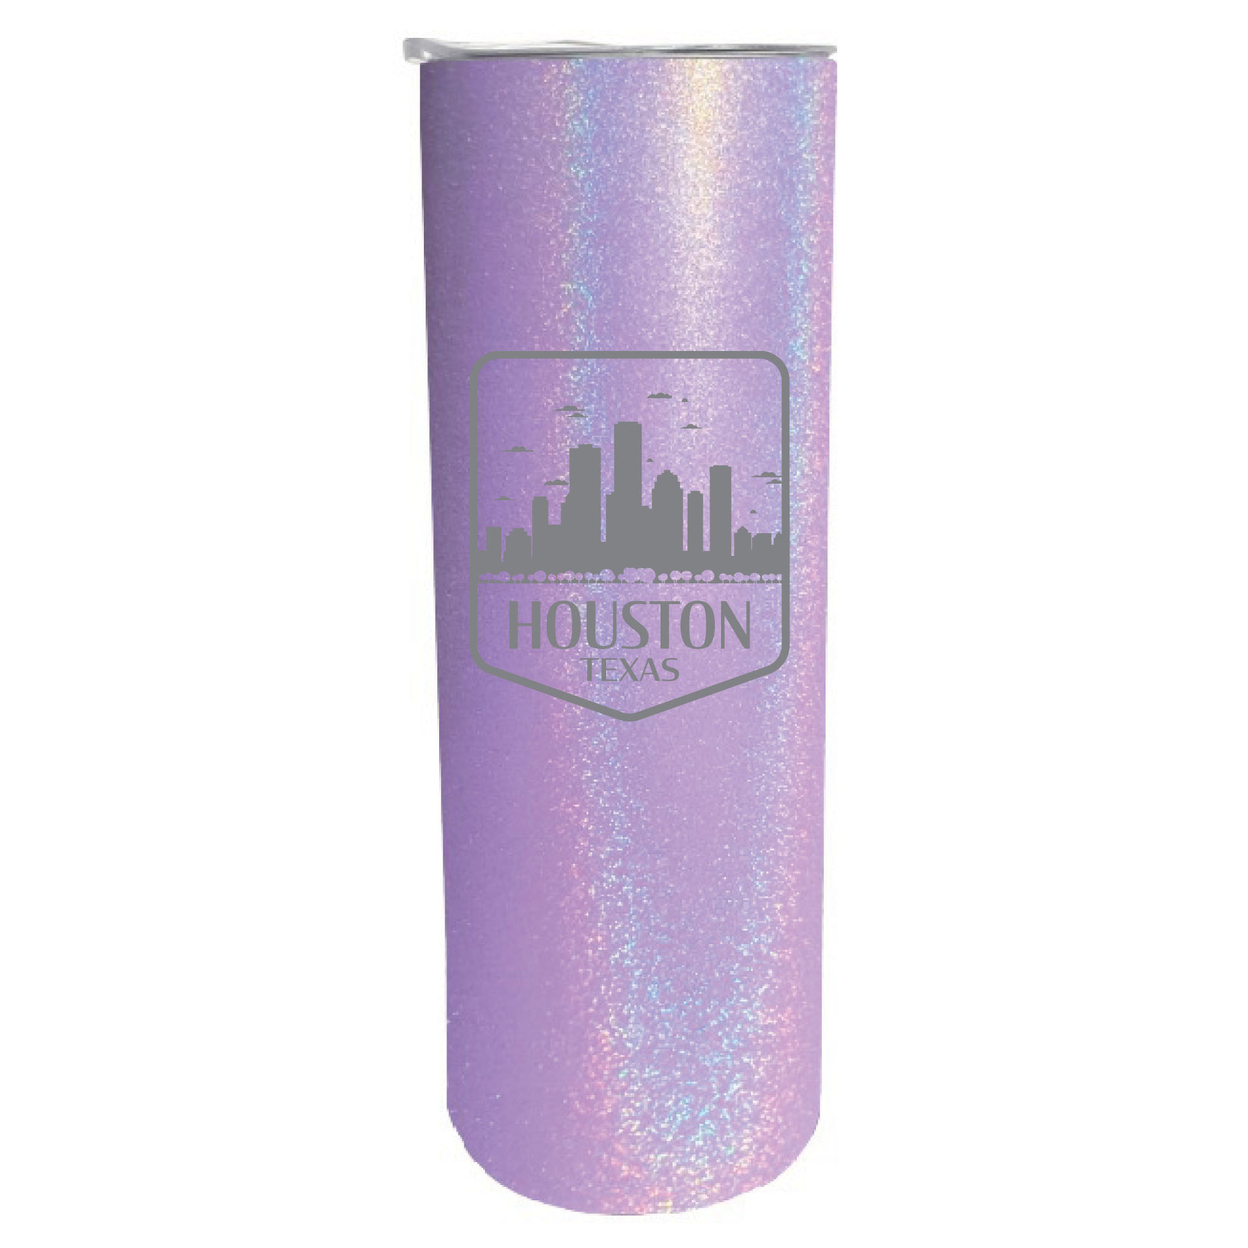 Houston Texas Souvenir 20 Oz Engraved Insulated Stainless Steel Skinny Tumbler - Purple Glitter,,2-Pack